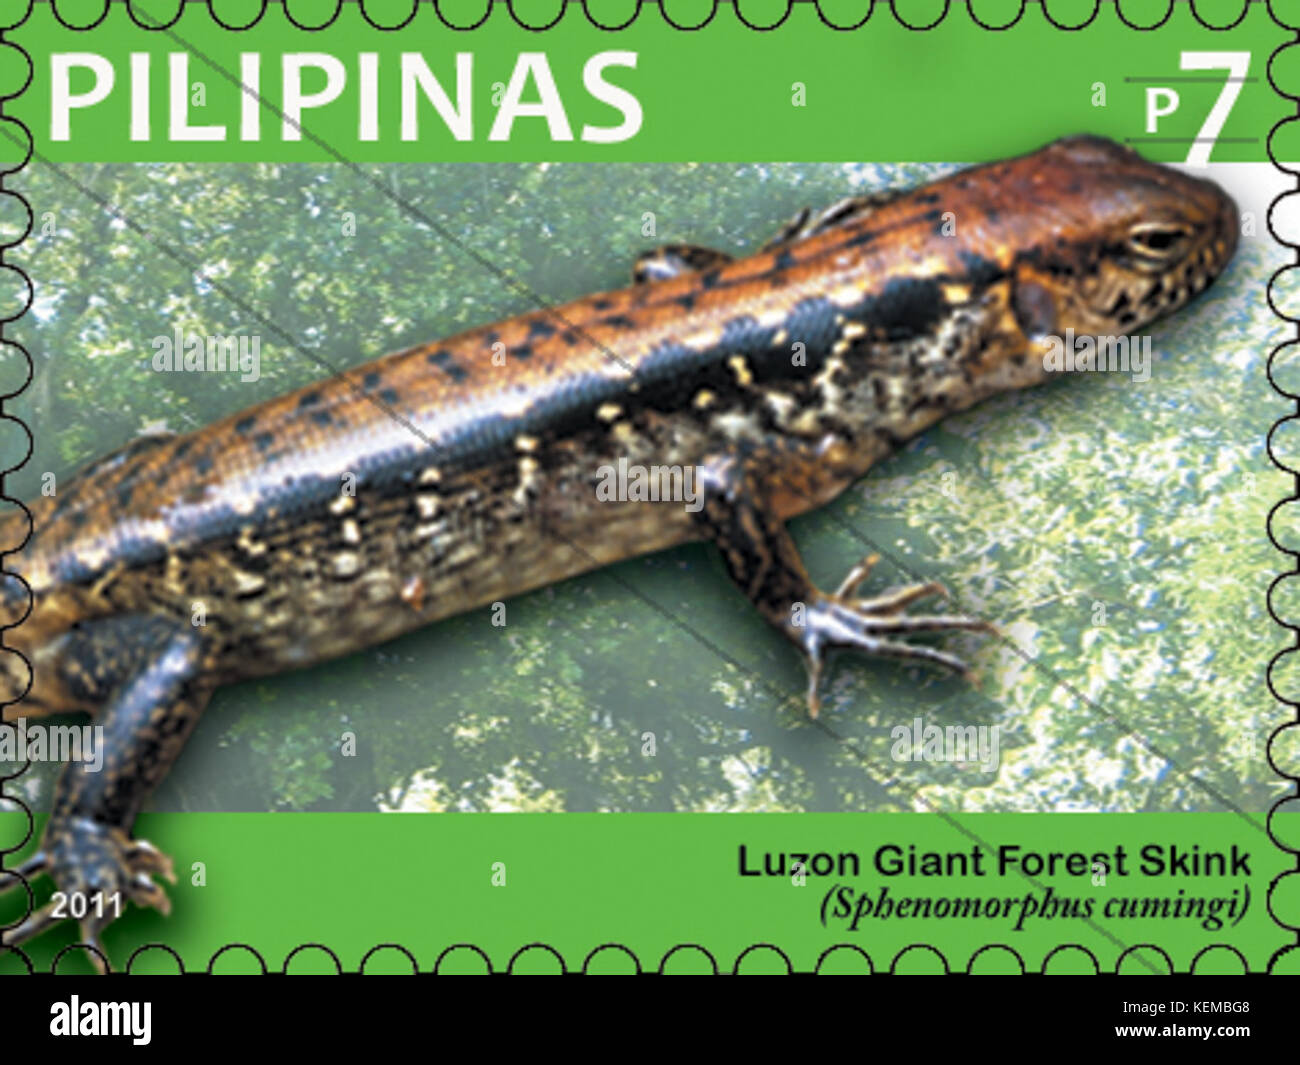 Sphenomorphus cumingi 2011 stamp of the Philippines Stock Photo